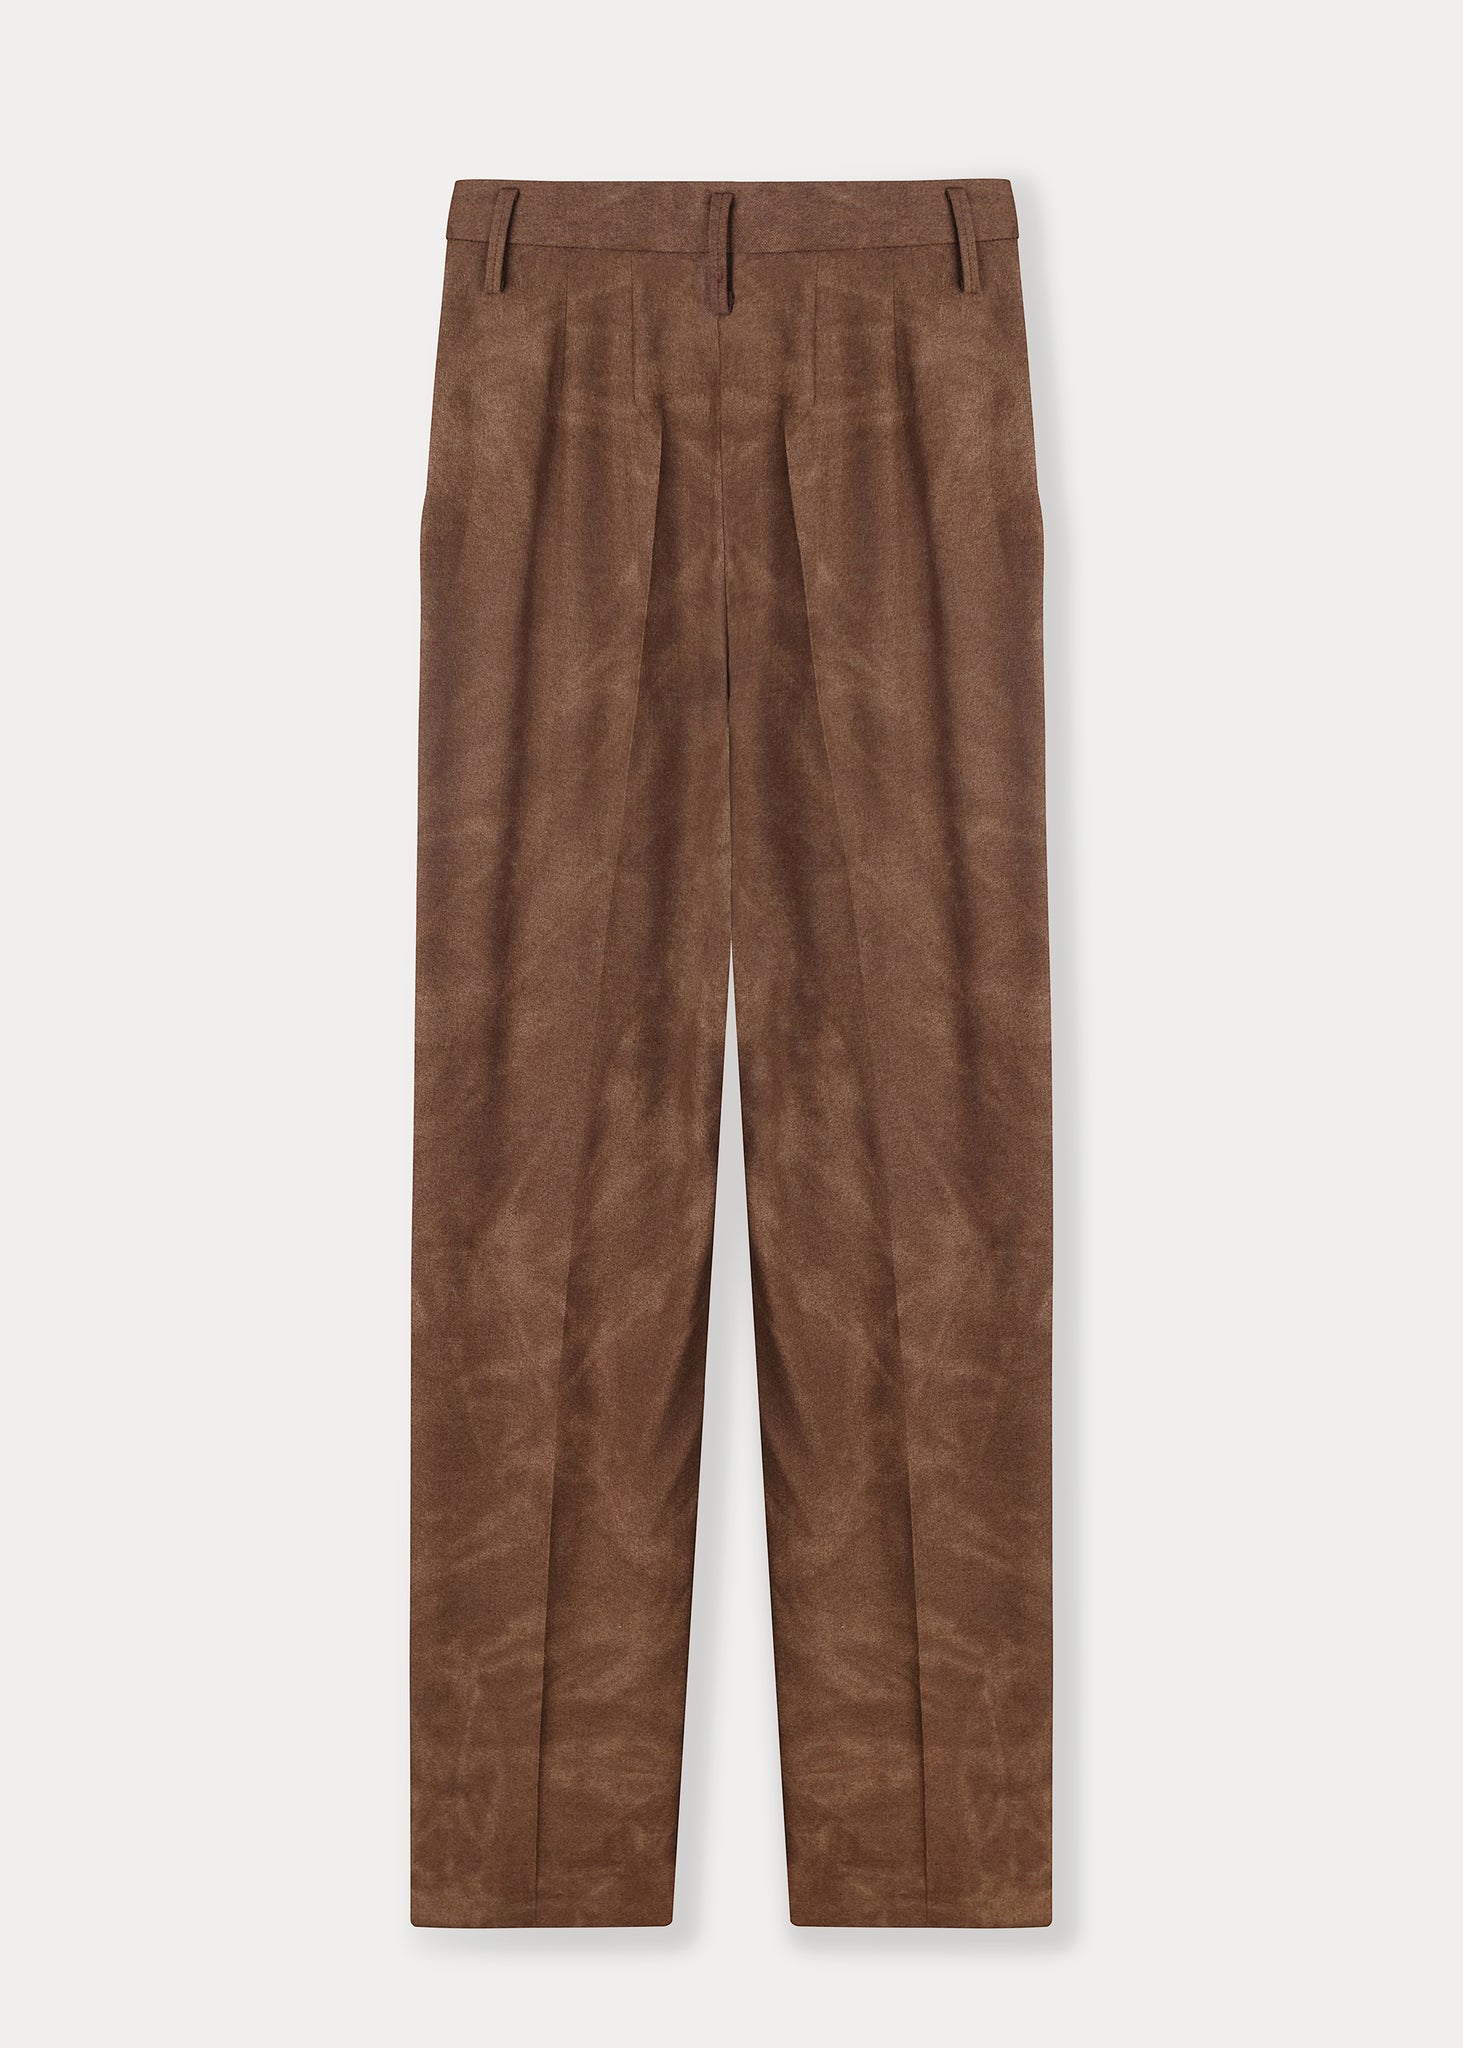 Brown Fall Pants